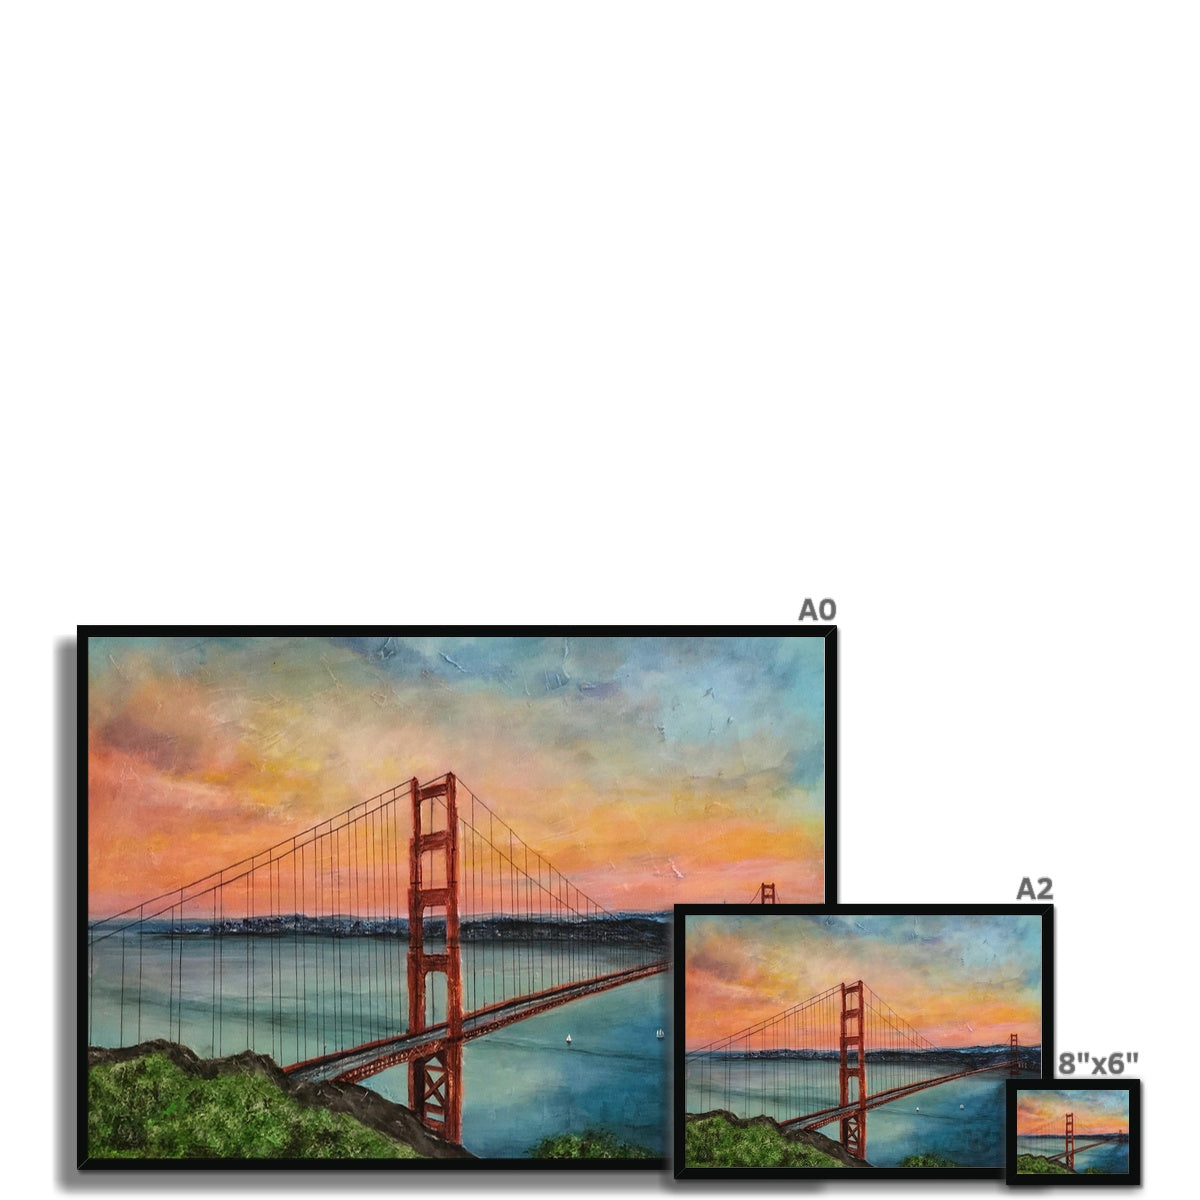 The Golden Gate Bridge Painting | Framed Prints From Scotland-Framed Prints-World Art Gallery-Paintings, Prints, Homeware, Art Gifts From Scotland By Scottish Artist Kevin Hunter